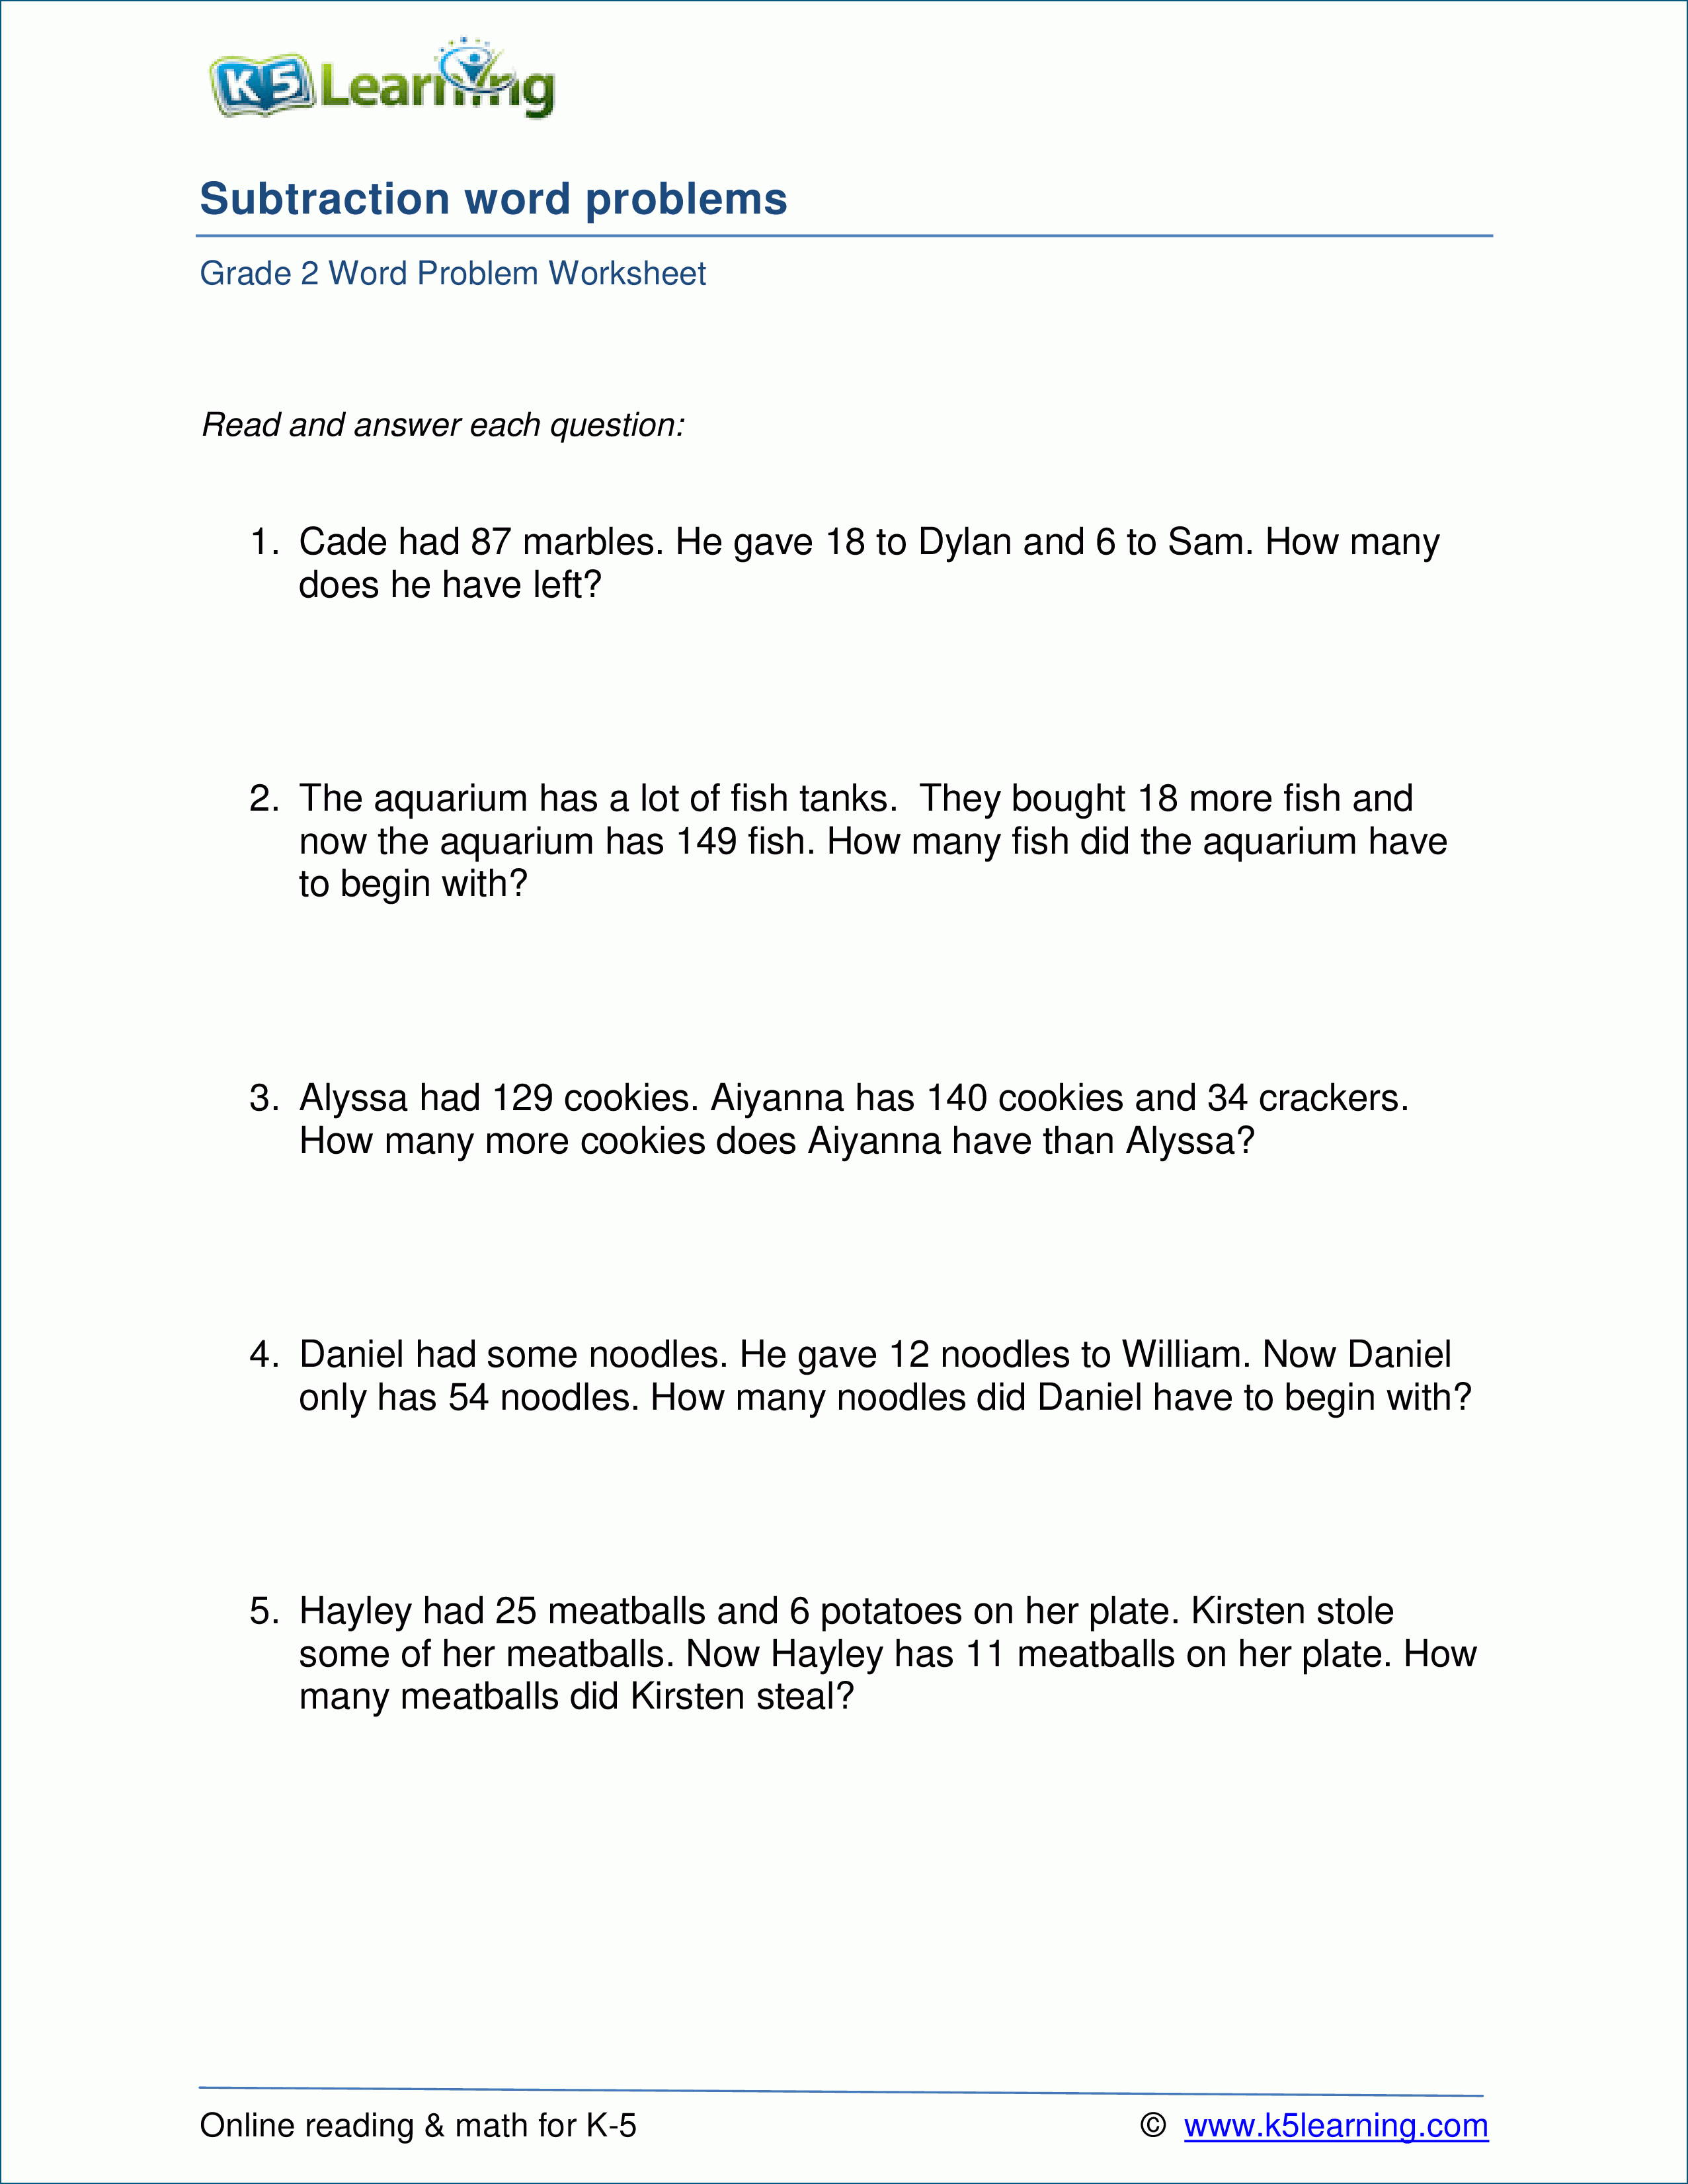 Grade 2 Subtraction Word Problem Worksheets 13 Digits  K5 Learning And K5 Learning Worksheets